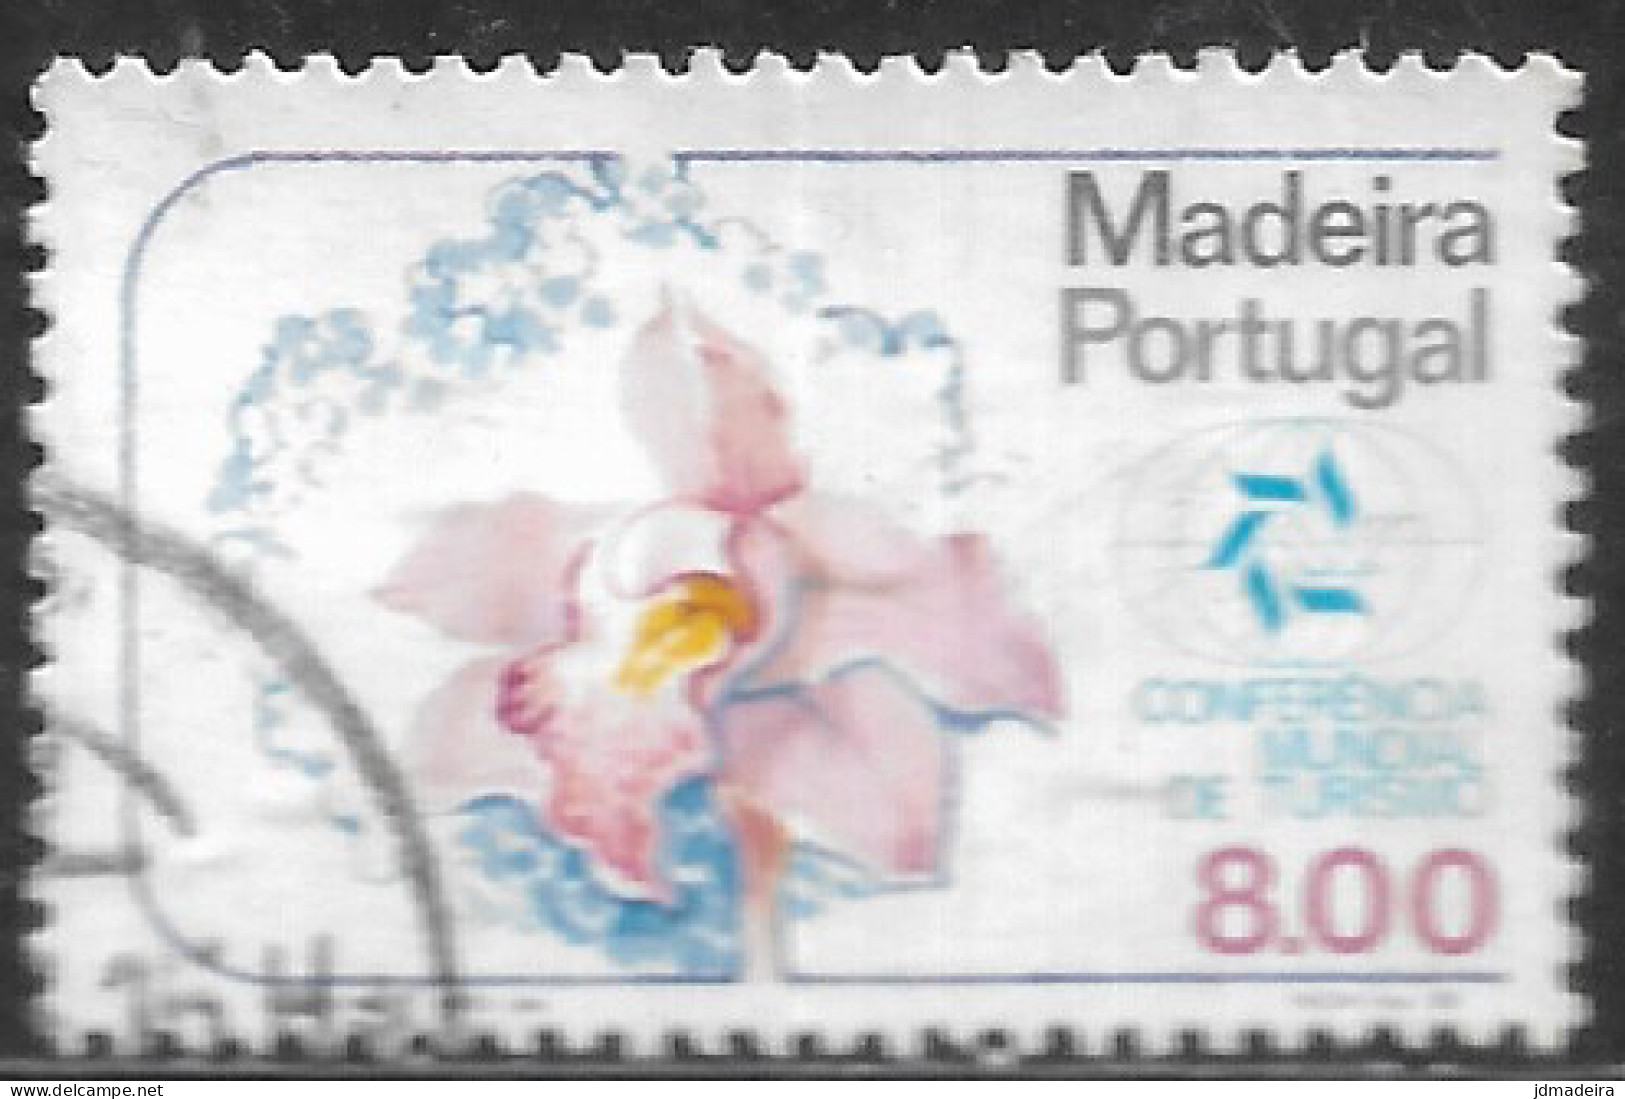 Portugal – 1980 Madeira Tourism 8.00 Used Stamp - Gebraucht